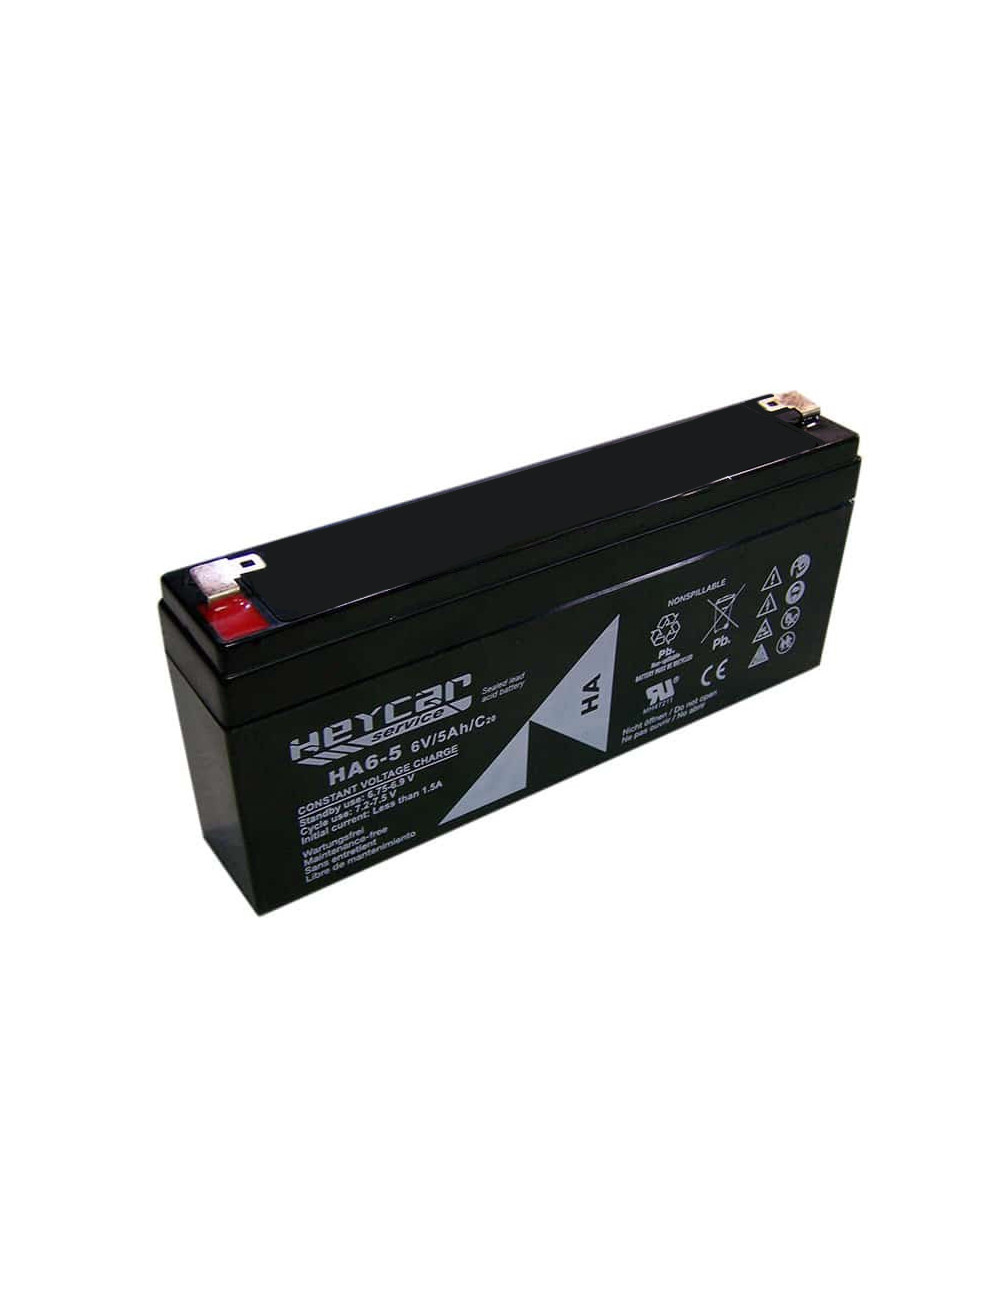 Batería para balanza digital GRAM K1, K3, K3I de 6V 5Ah C20 Heycar Service HA6-5 - HA6-5 -  - 8435231203173 - 1